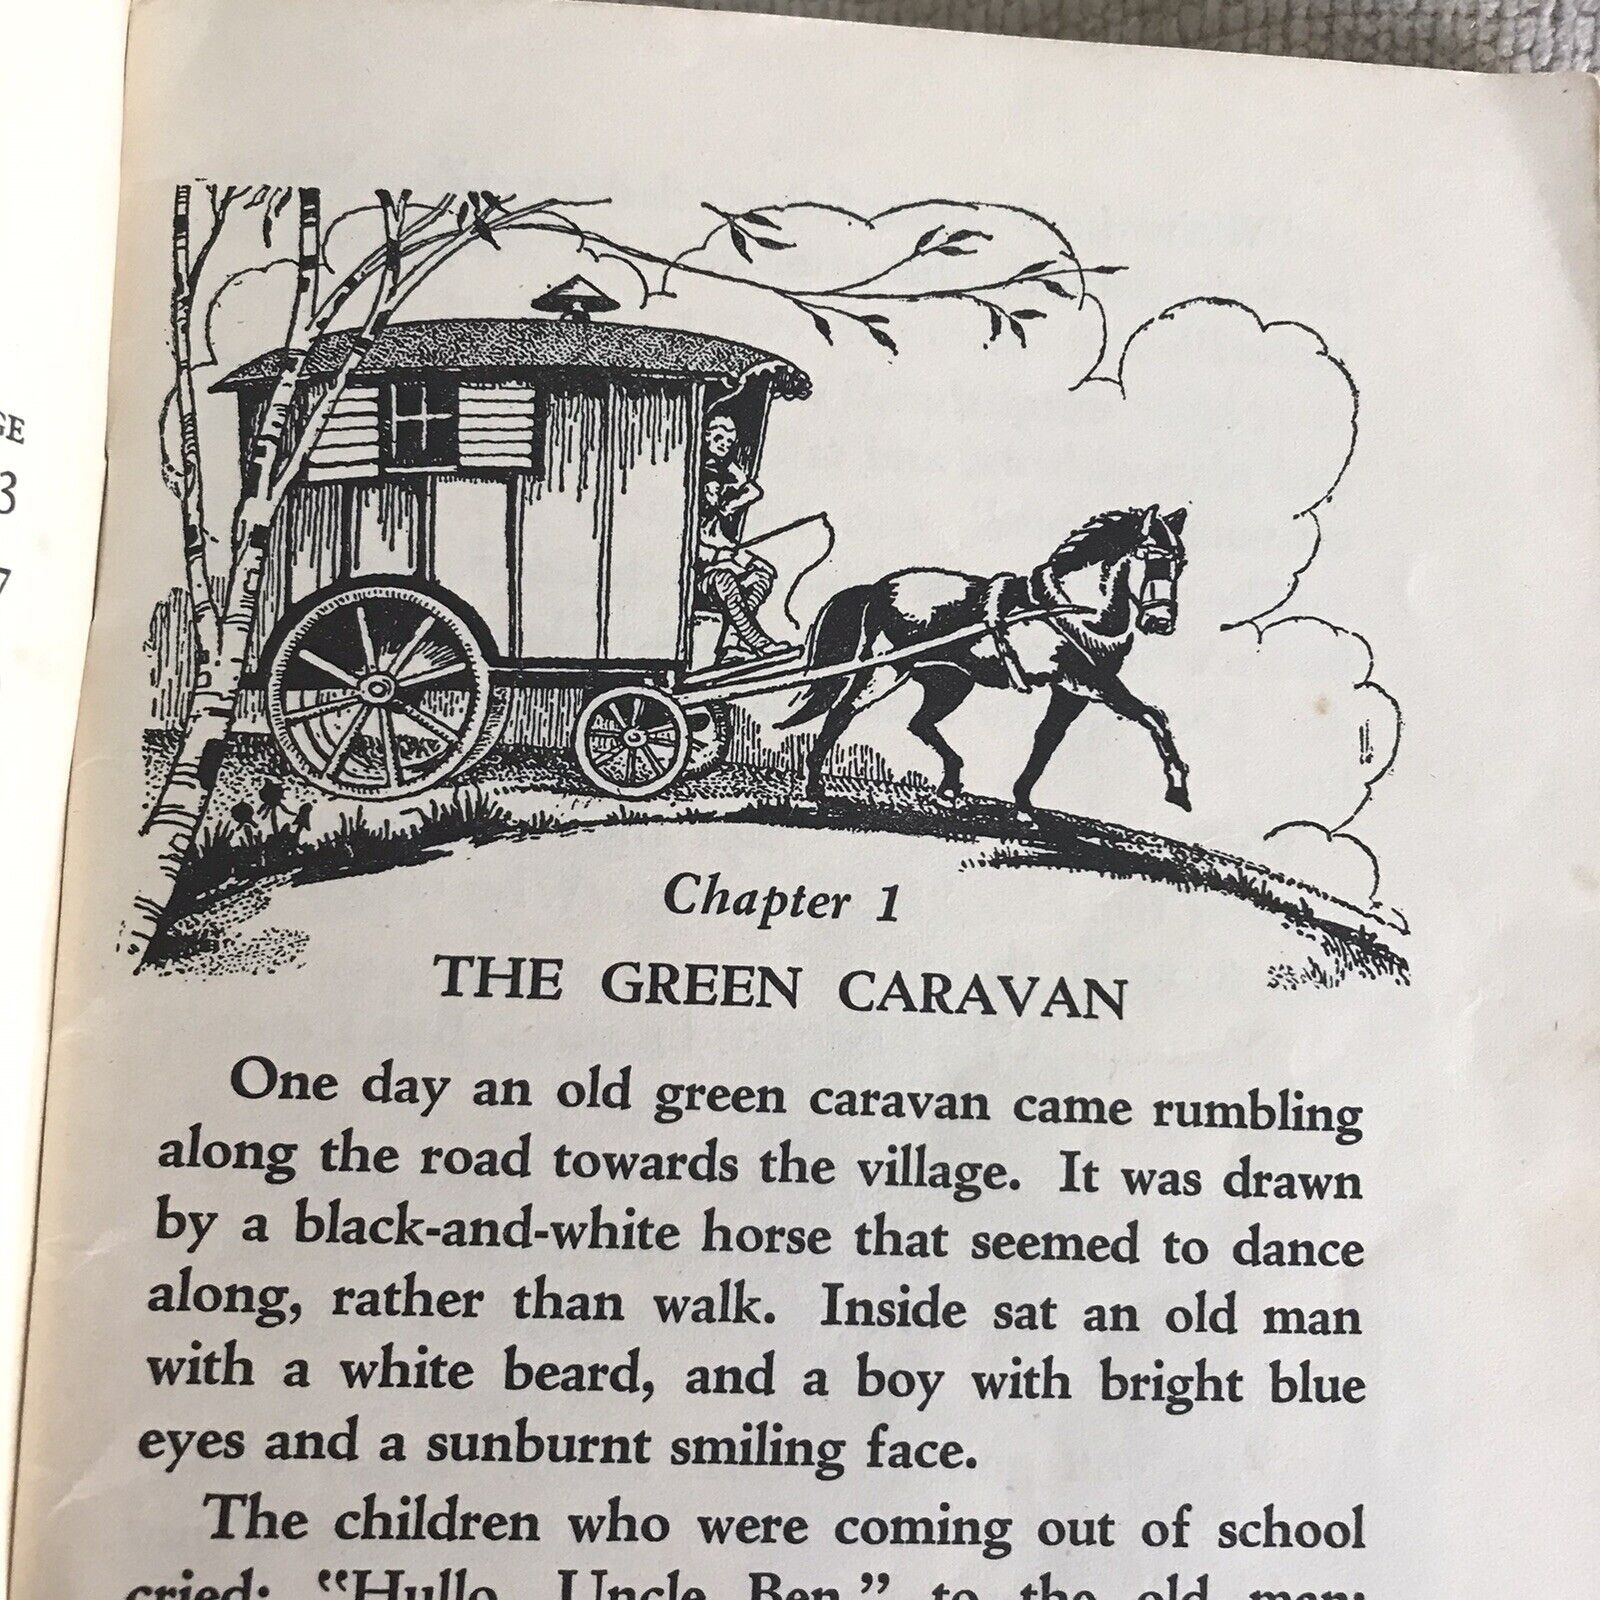 1942 Caravan Boy - Lavinia Derwent (Lorna A. Steele) Whitcombe & Tombs Honeyburn Books (UK)